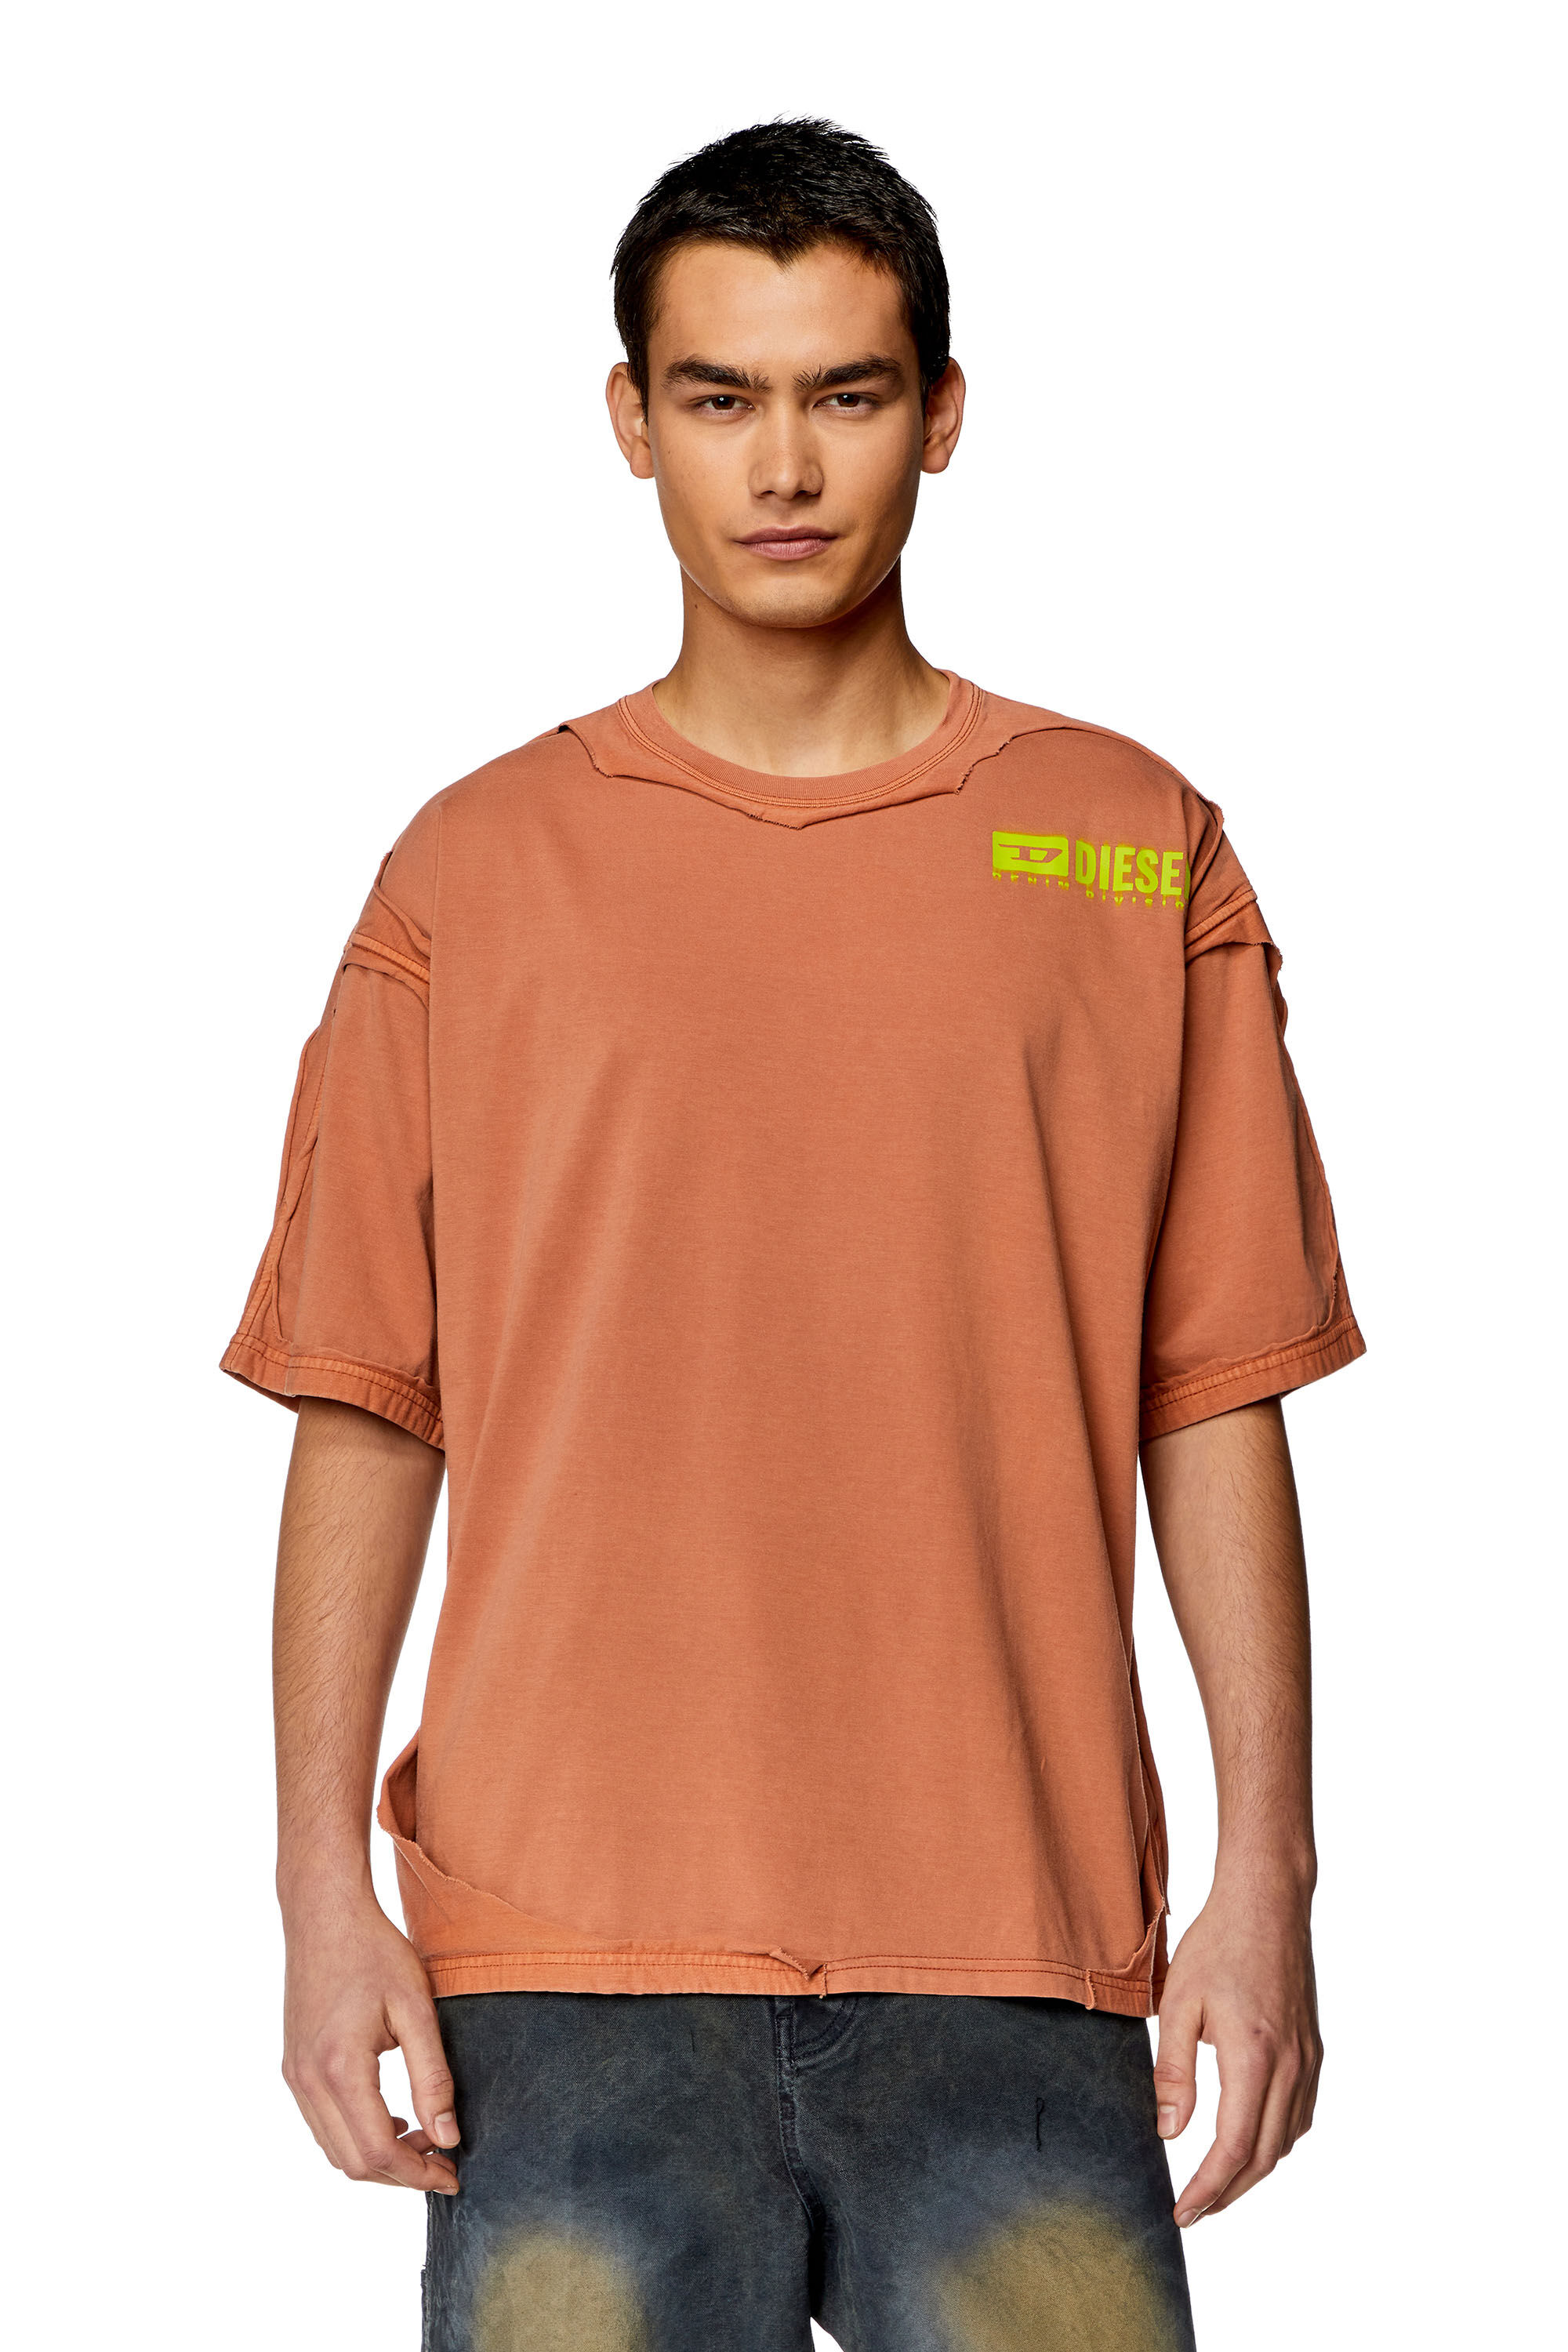 Diesel - T-BOXT-DBL, Homme T-shirt avec effet peel-off destroy in Orange - Image 3